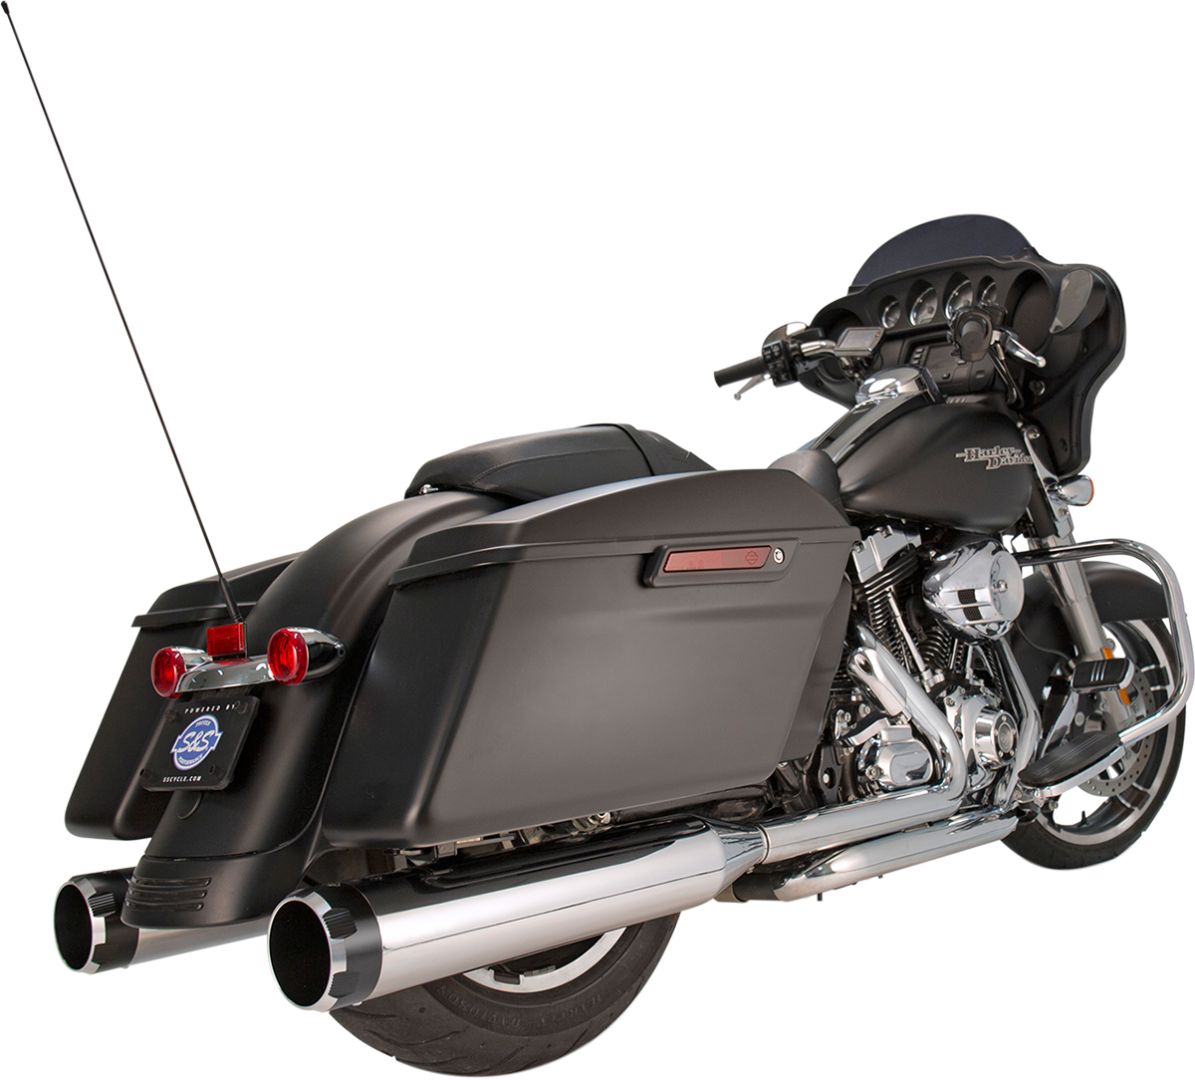 S&s cycle KIPUFOGÓ 4.5" FELCSÚSZTATHATÓ MK45 BLACK CONTRAST CUT THRUSTER END CAP-CHROME BODY FINISH Harley Davidson FLHR 1340 Road King motor kipufogó 0